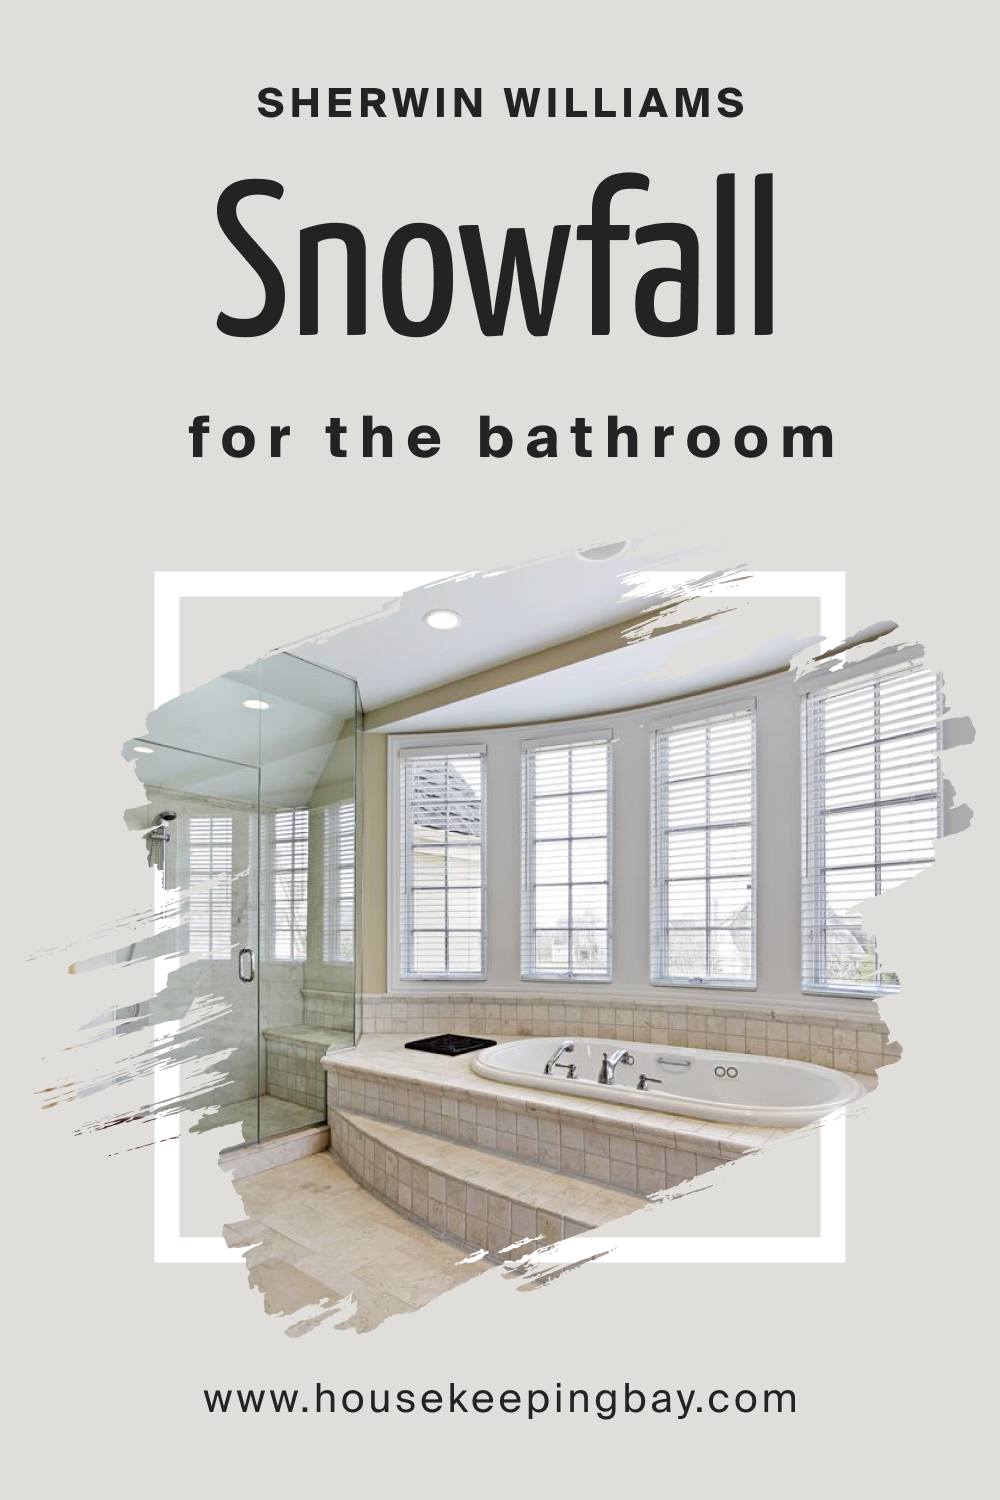 Sherwin Williams. Snowfall For the Bathroom